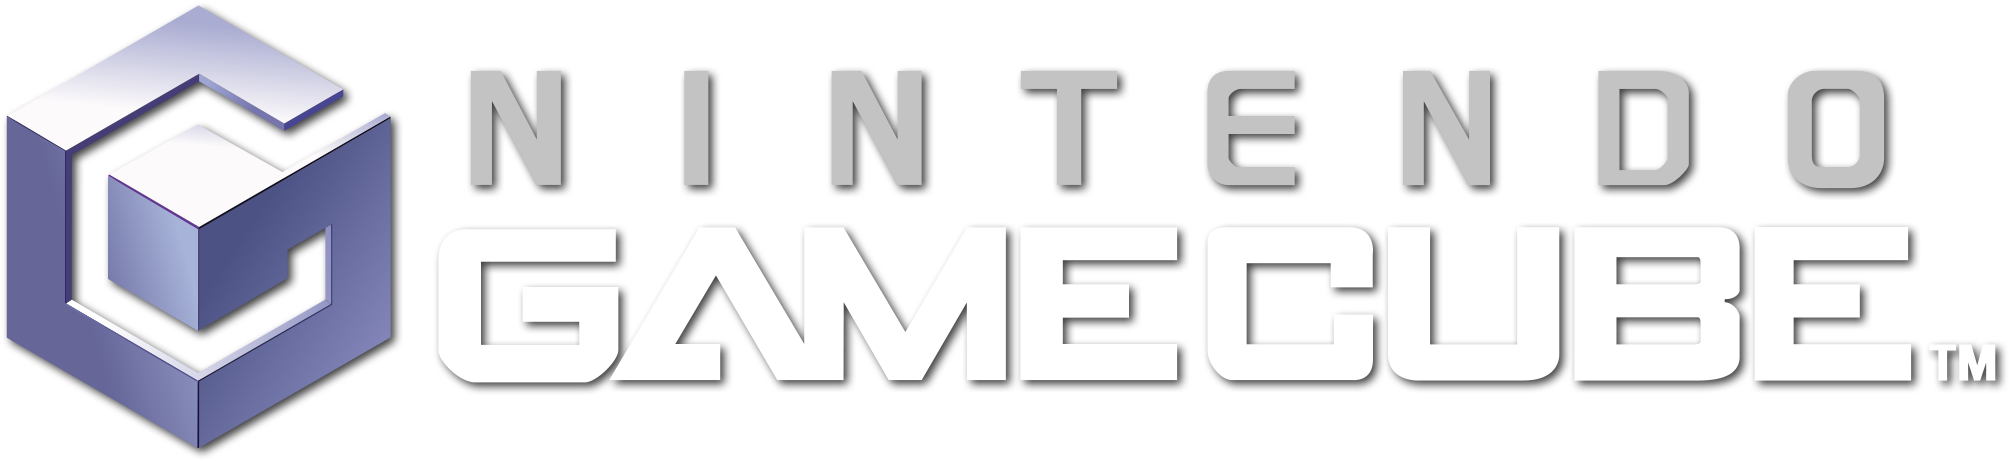 Nintendo GameCube Logo.png